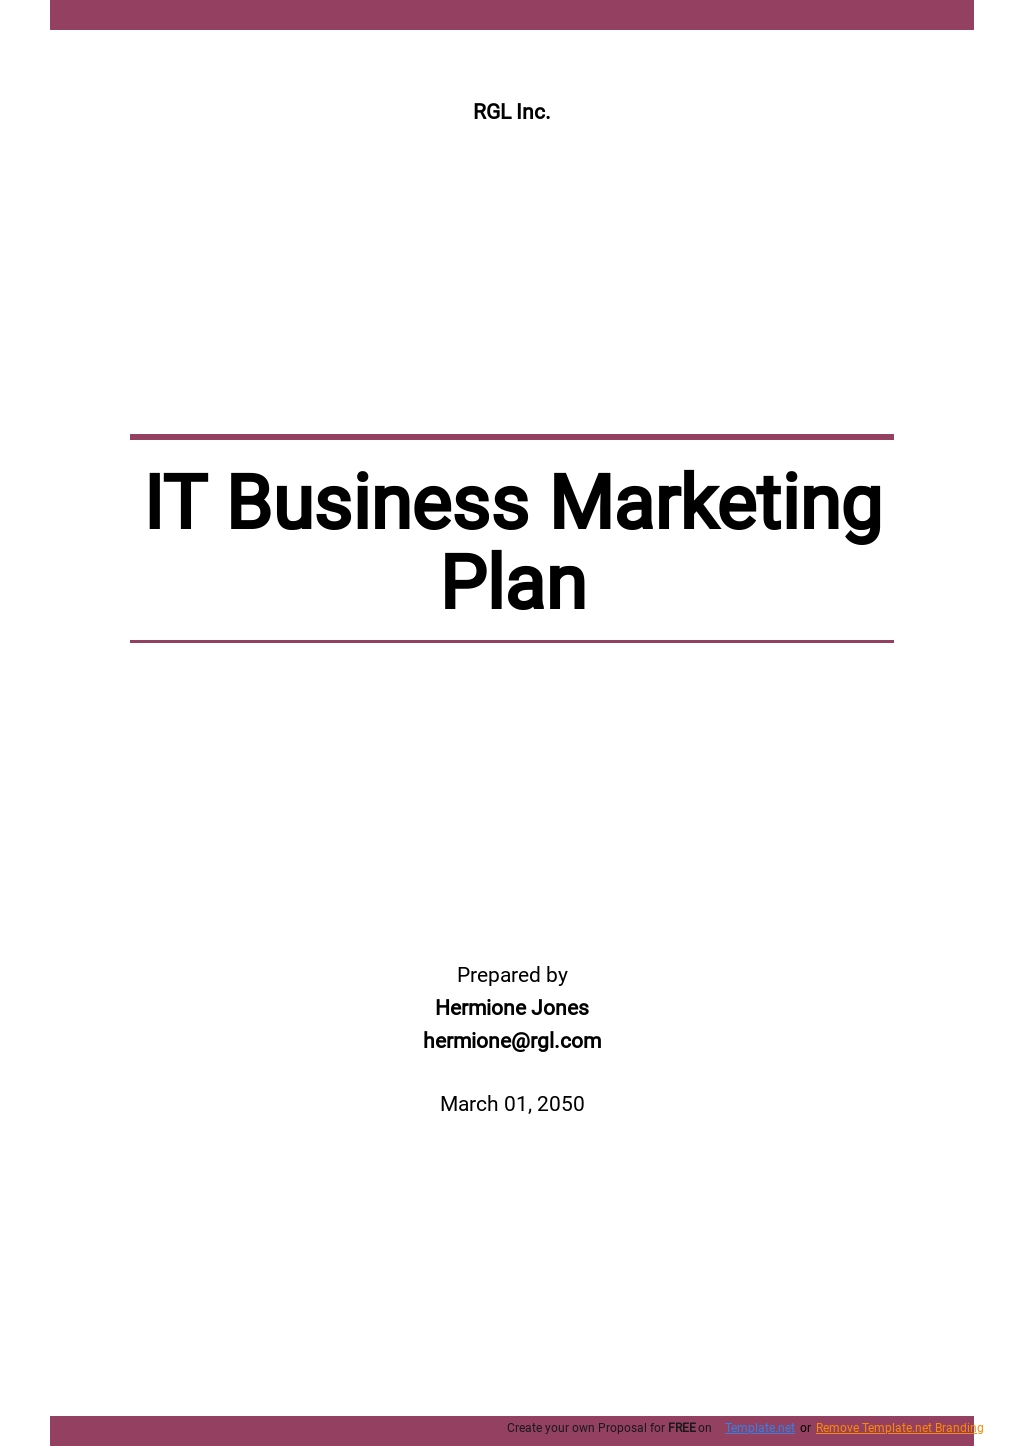 Free Sample IT Business Marketing Plan Template